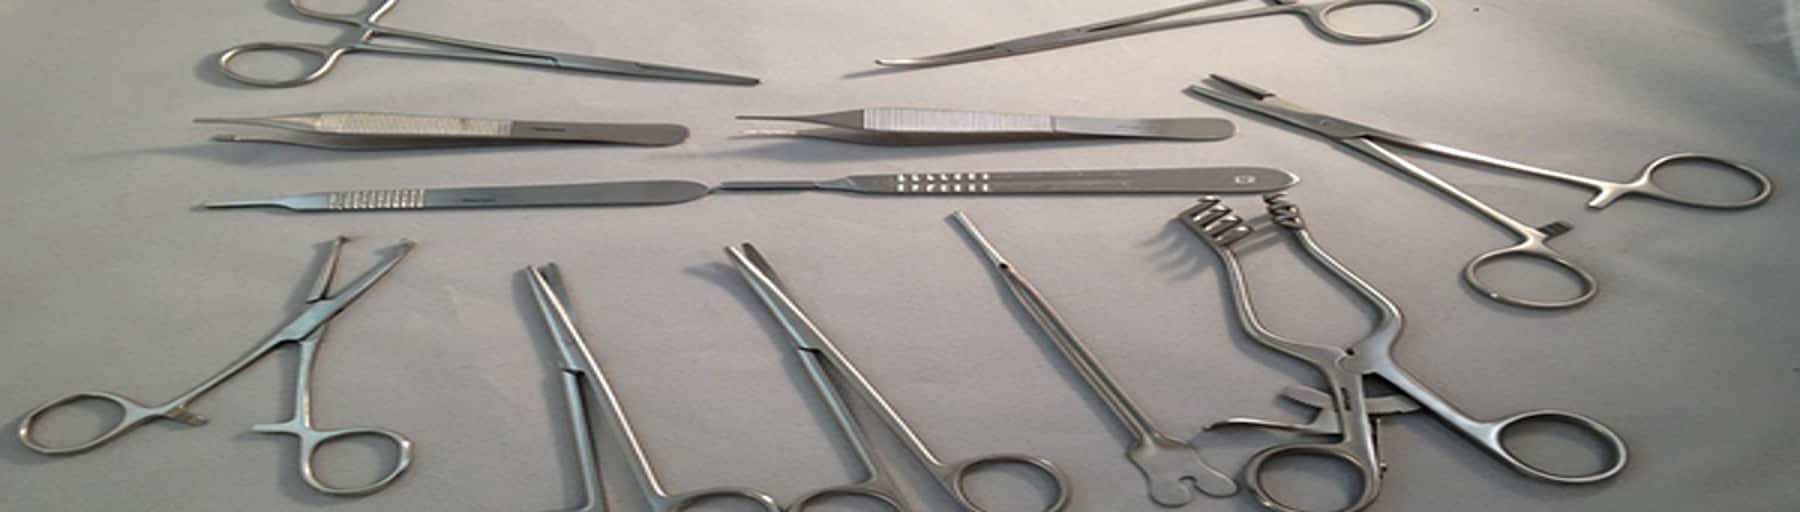 Gynaecologische / IUD instrumenten